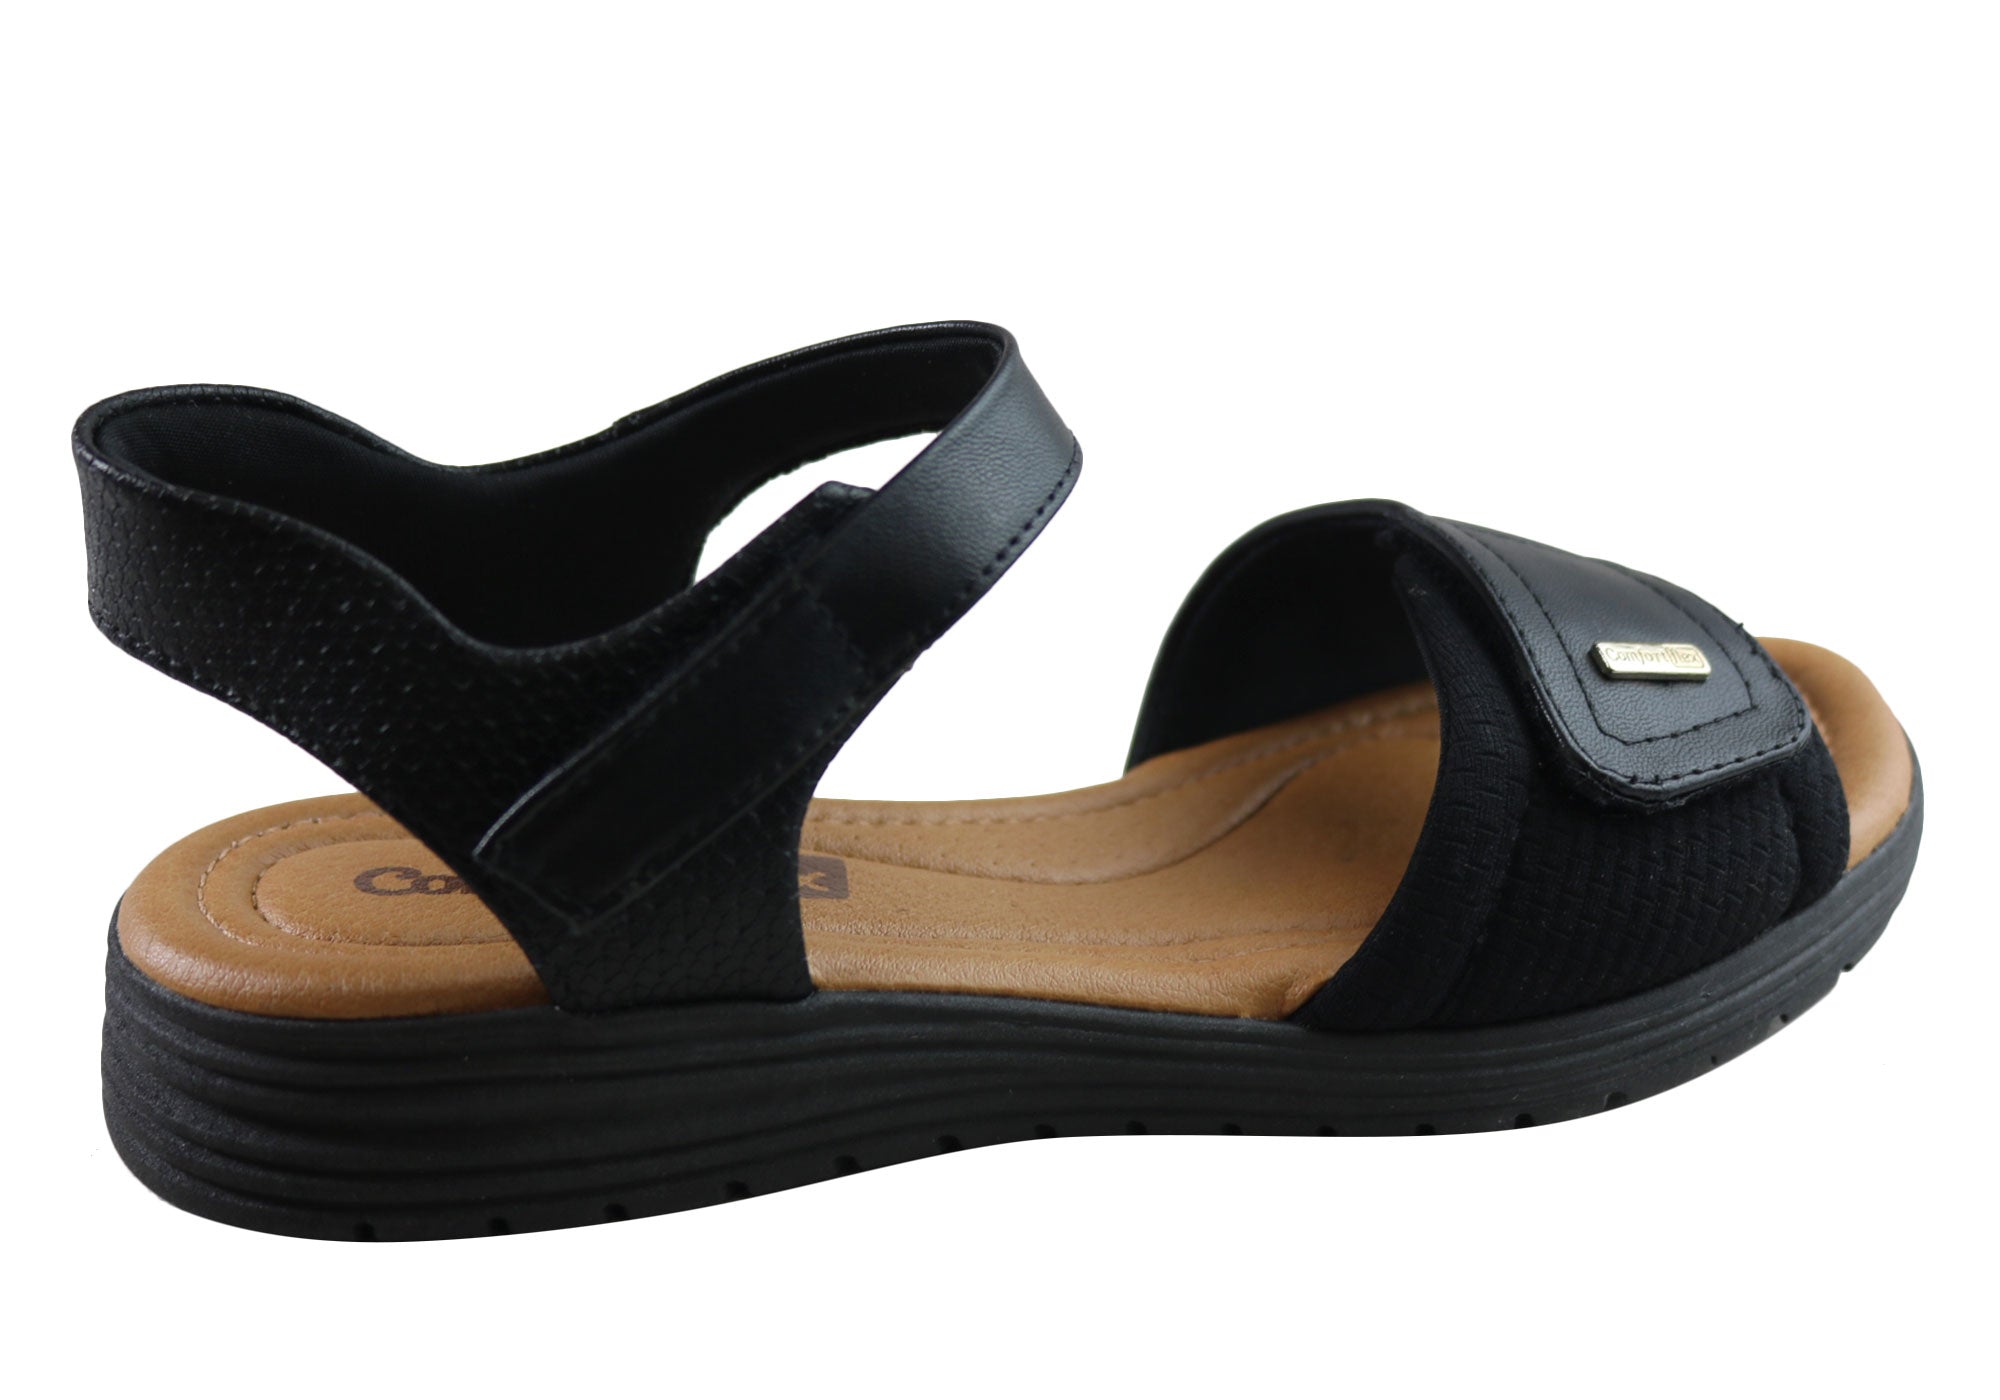 Comfortflex Helen Womens Comfortable Sandals Made In Brazil